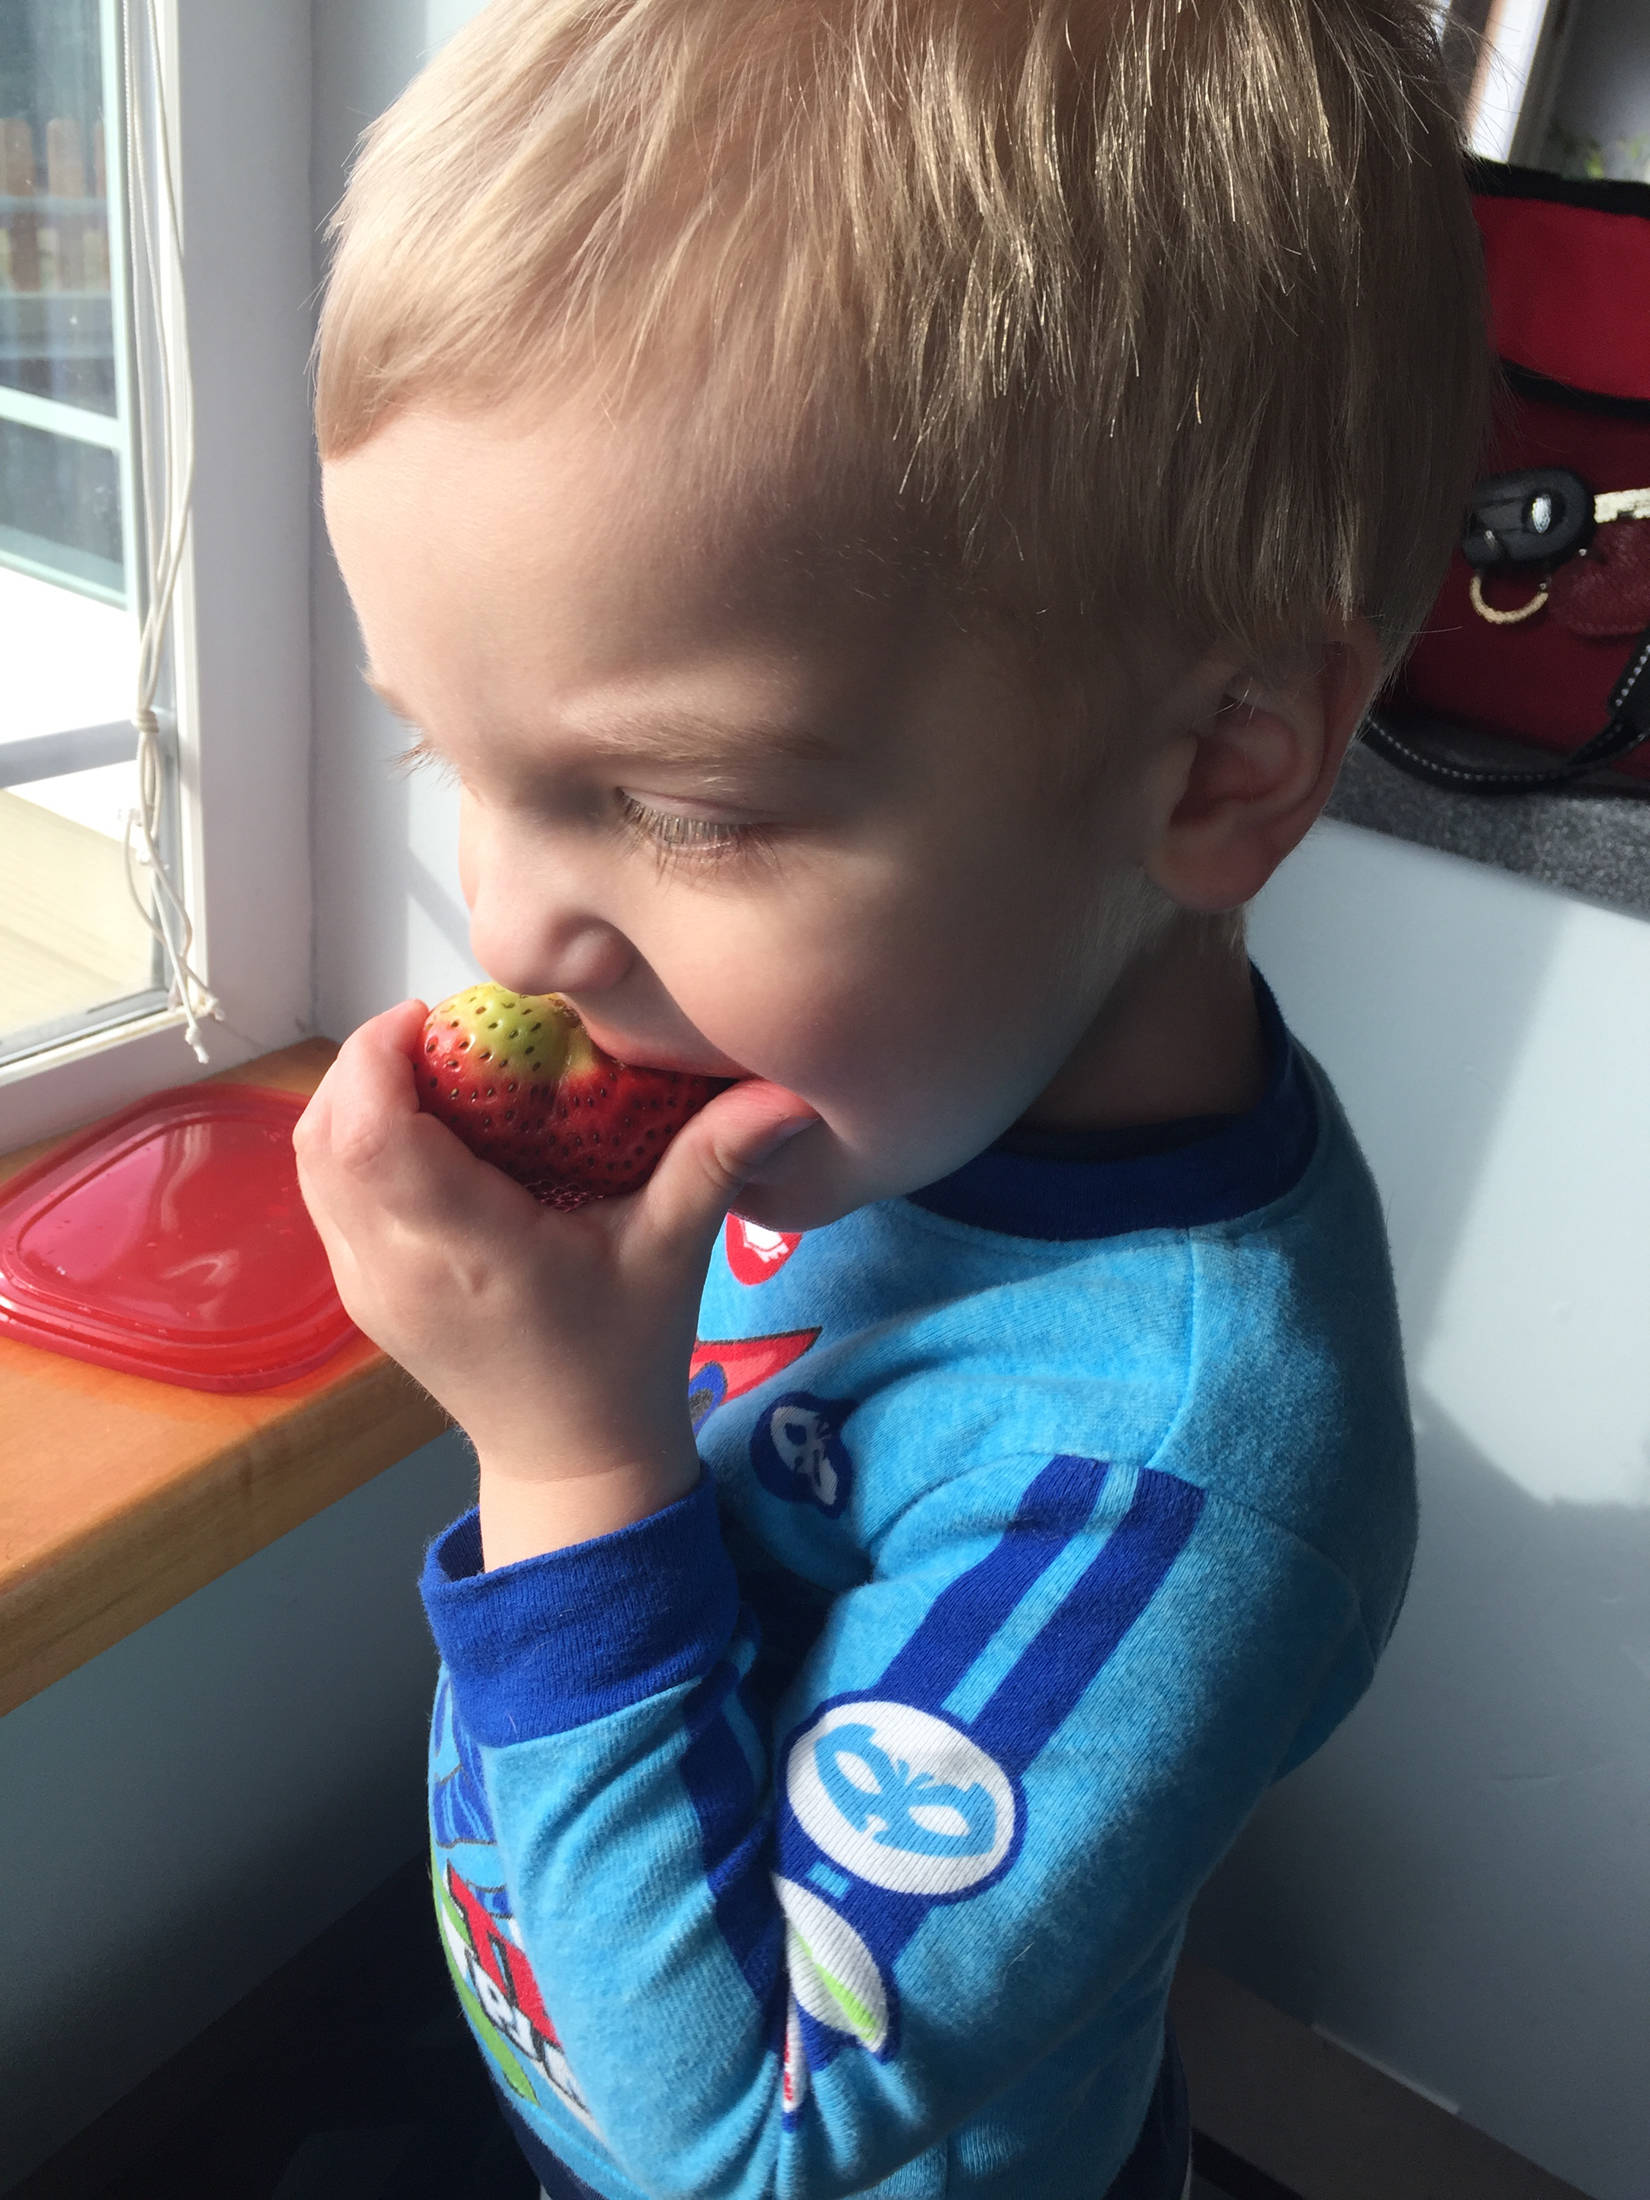 Kase Robl, 2, enjoys a strawberry in Homer, Alaska. (Photo by Teri Robl)